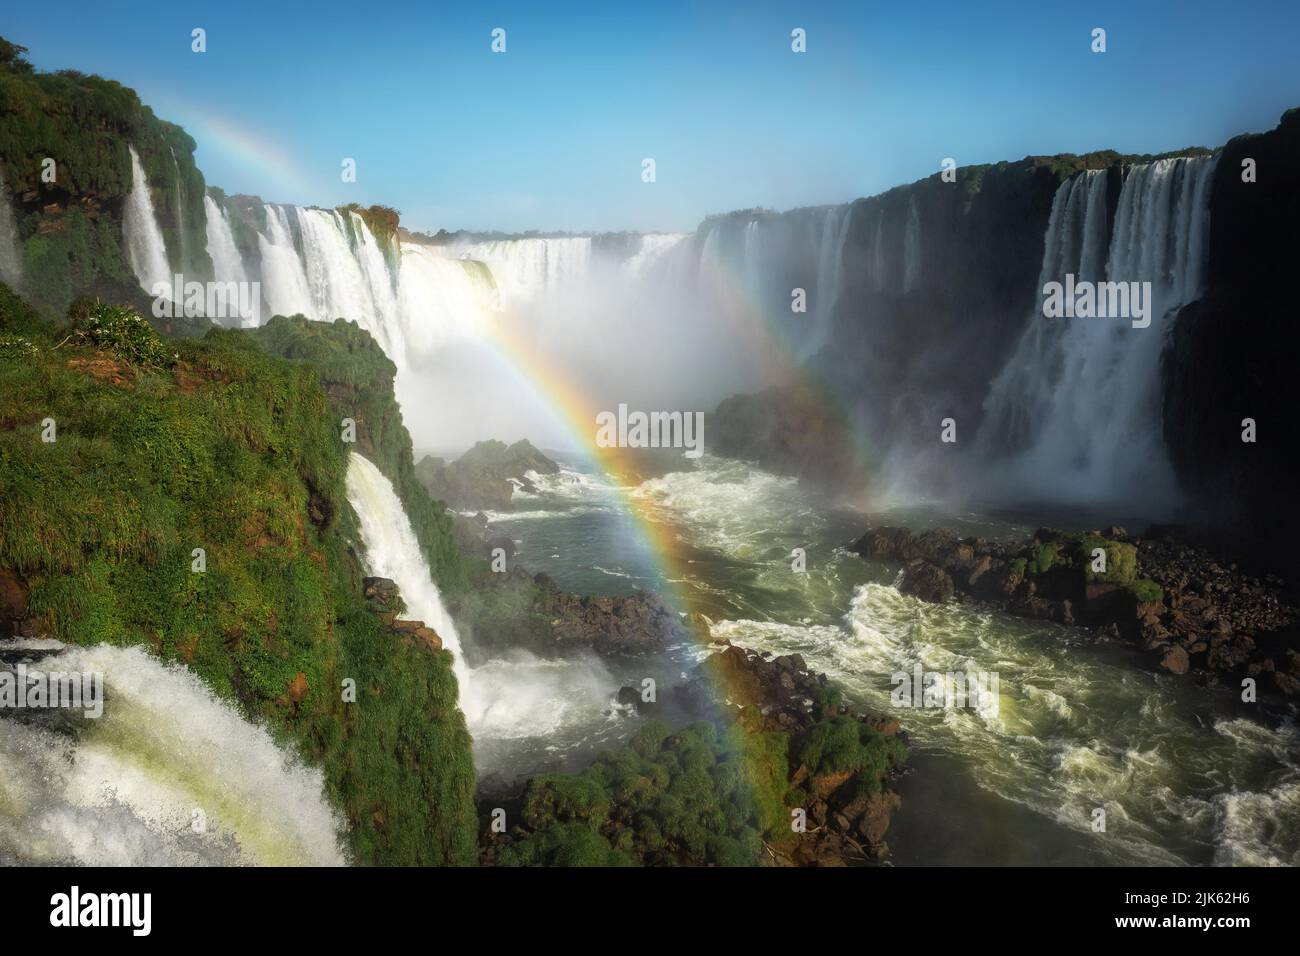 World famous Iguazu Falls on the border of Brazil and Argentina. Stock Photo